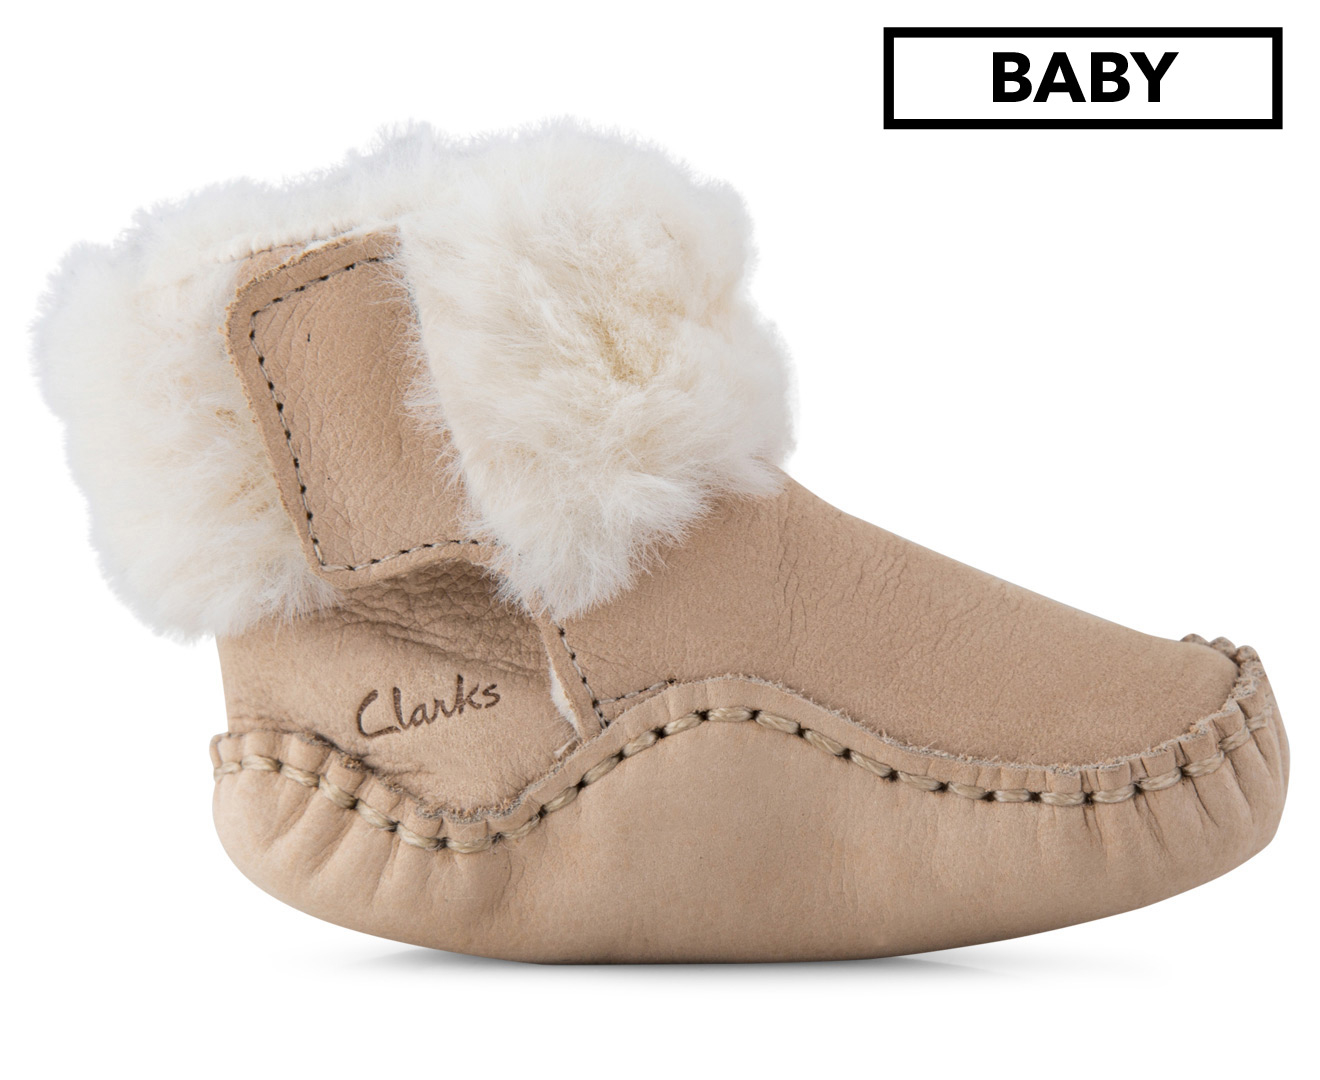 Clarks Baby Cuddle Boot - Cream